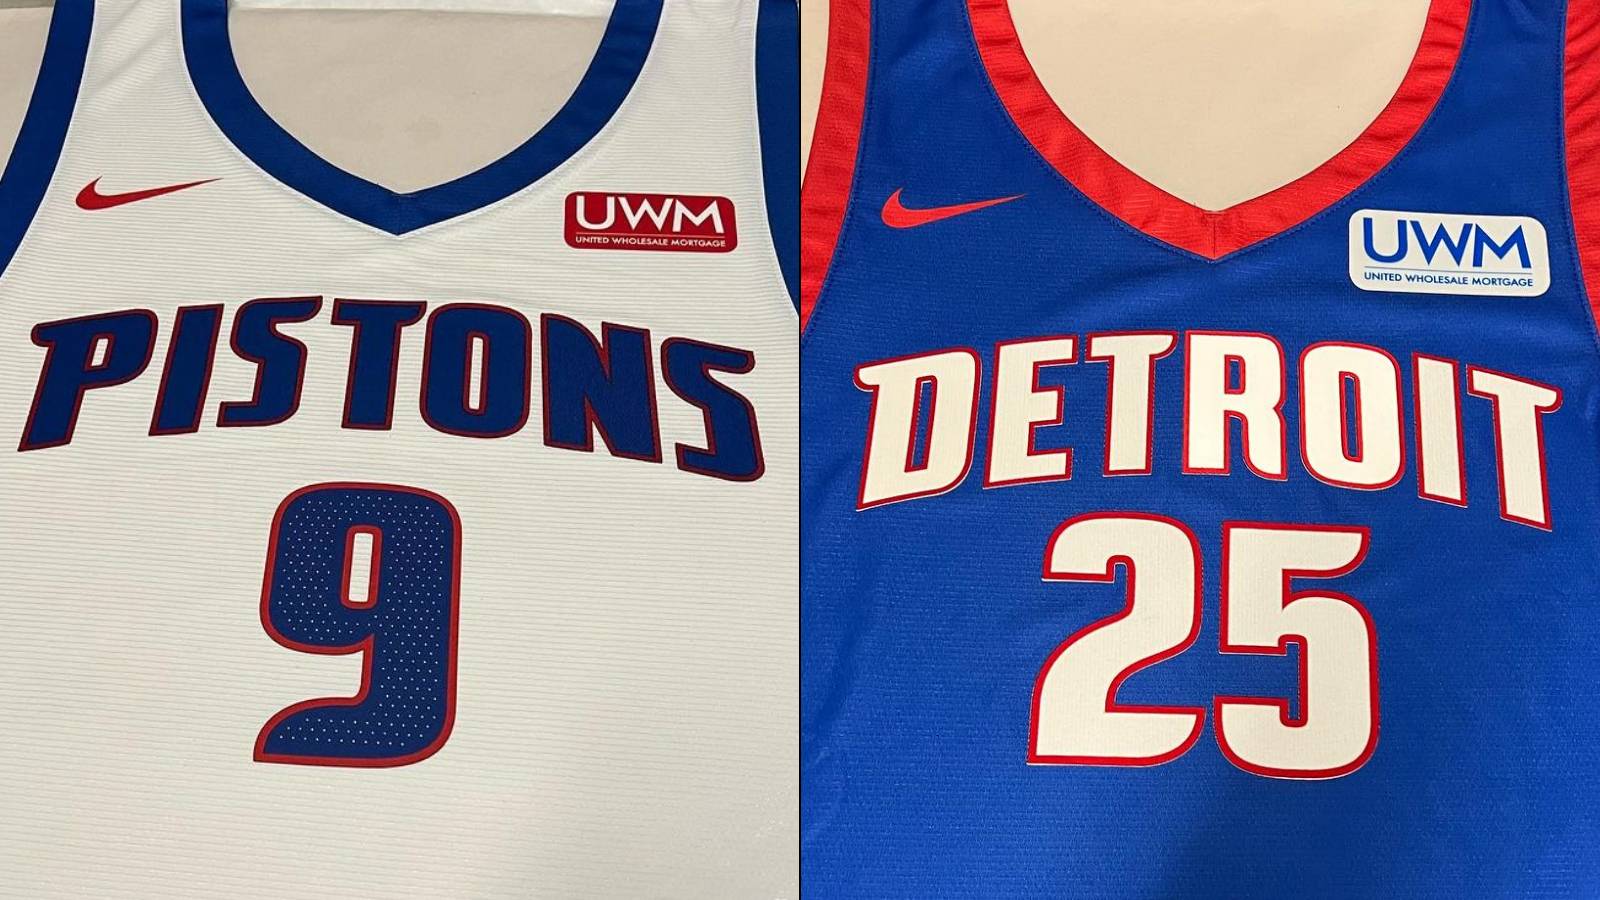 Detroit Pistons Summer League Jerseys Revealed